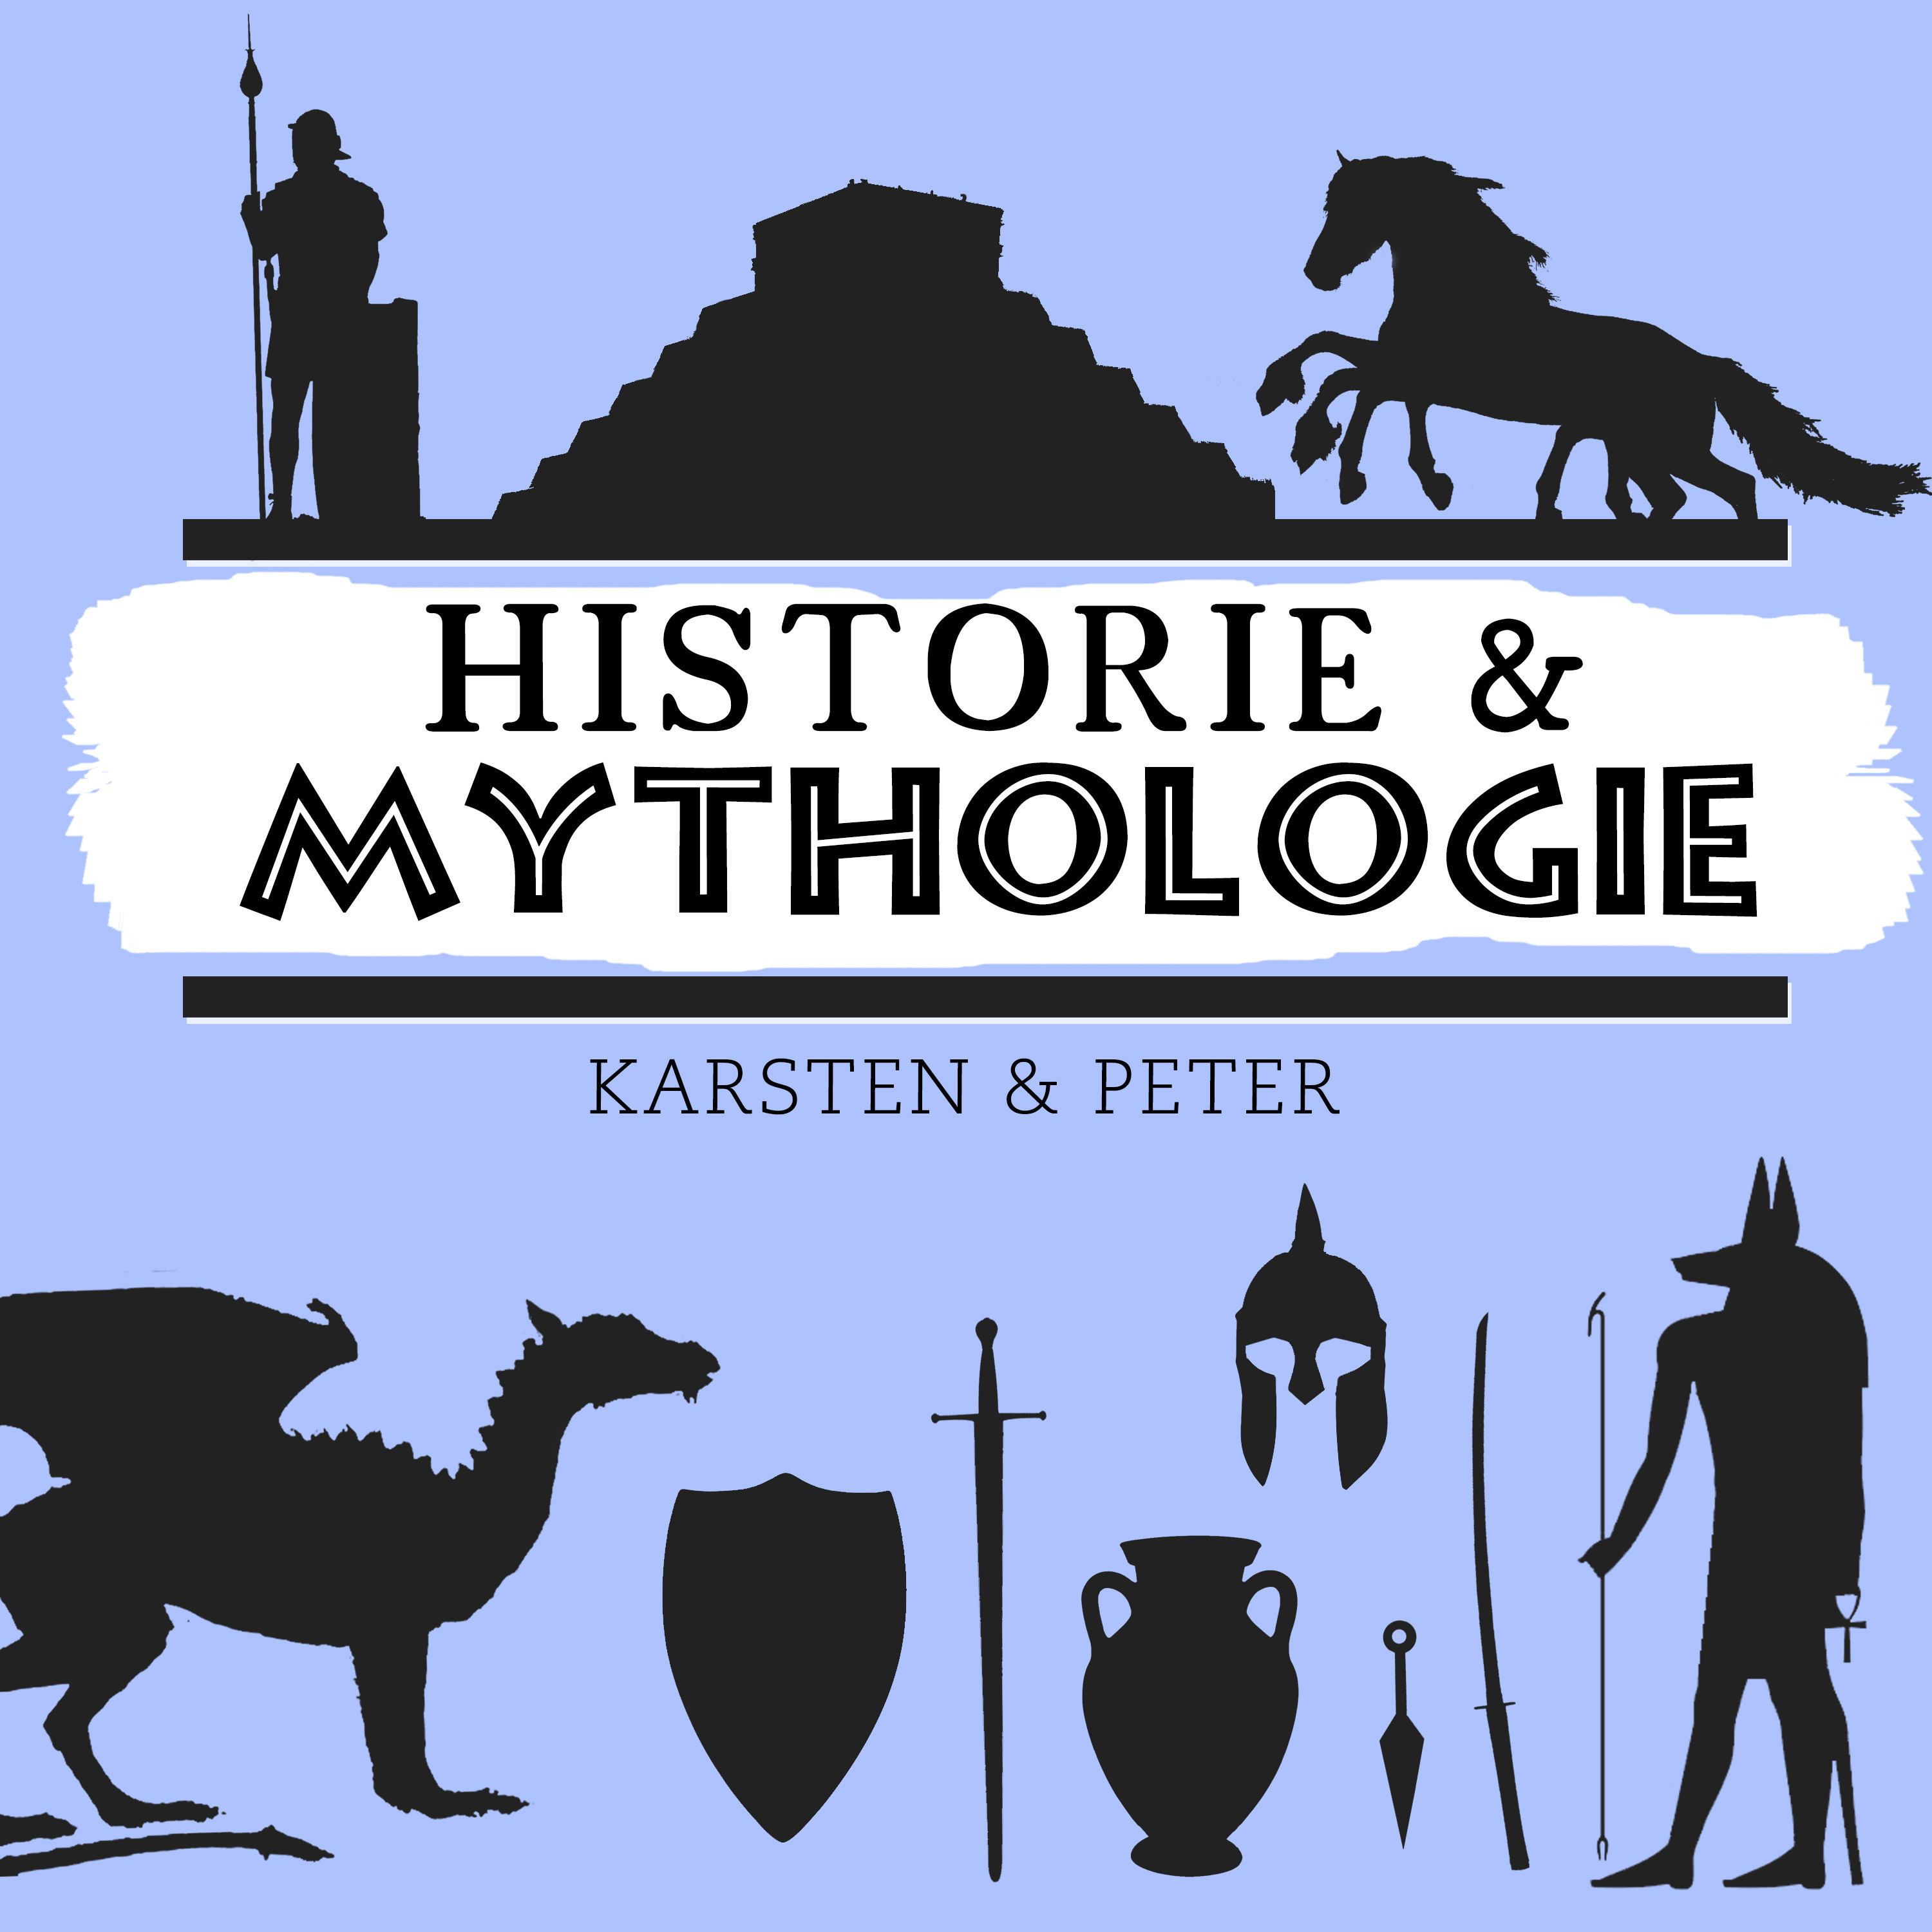 Historie & Mythologie logo